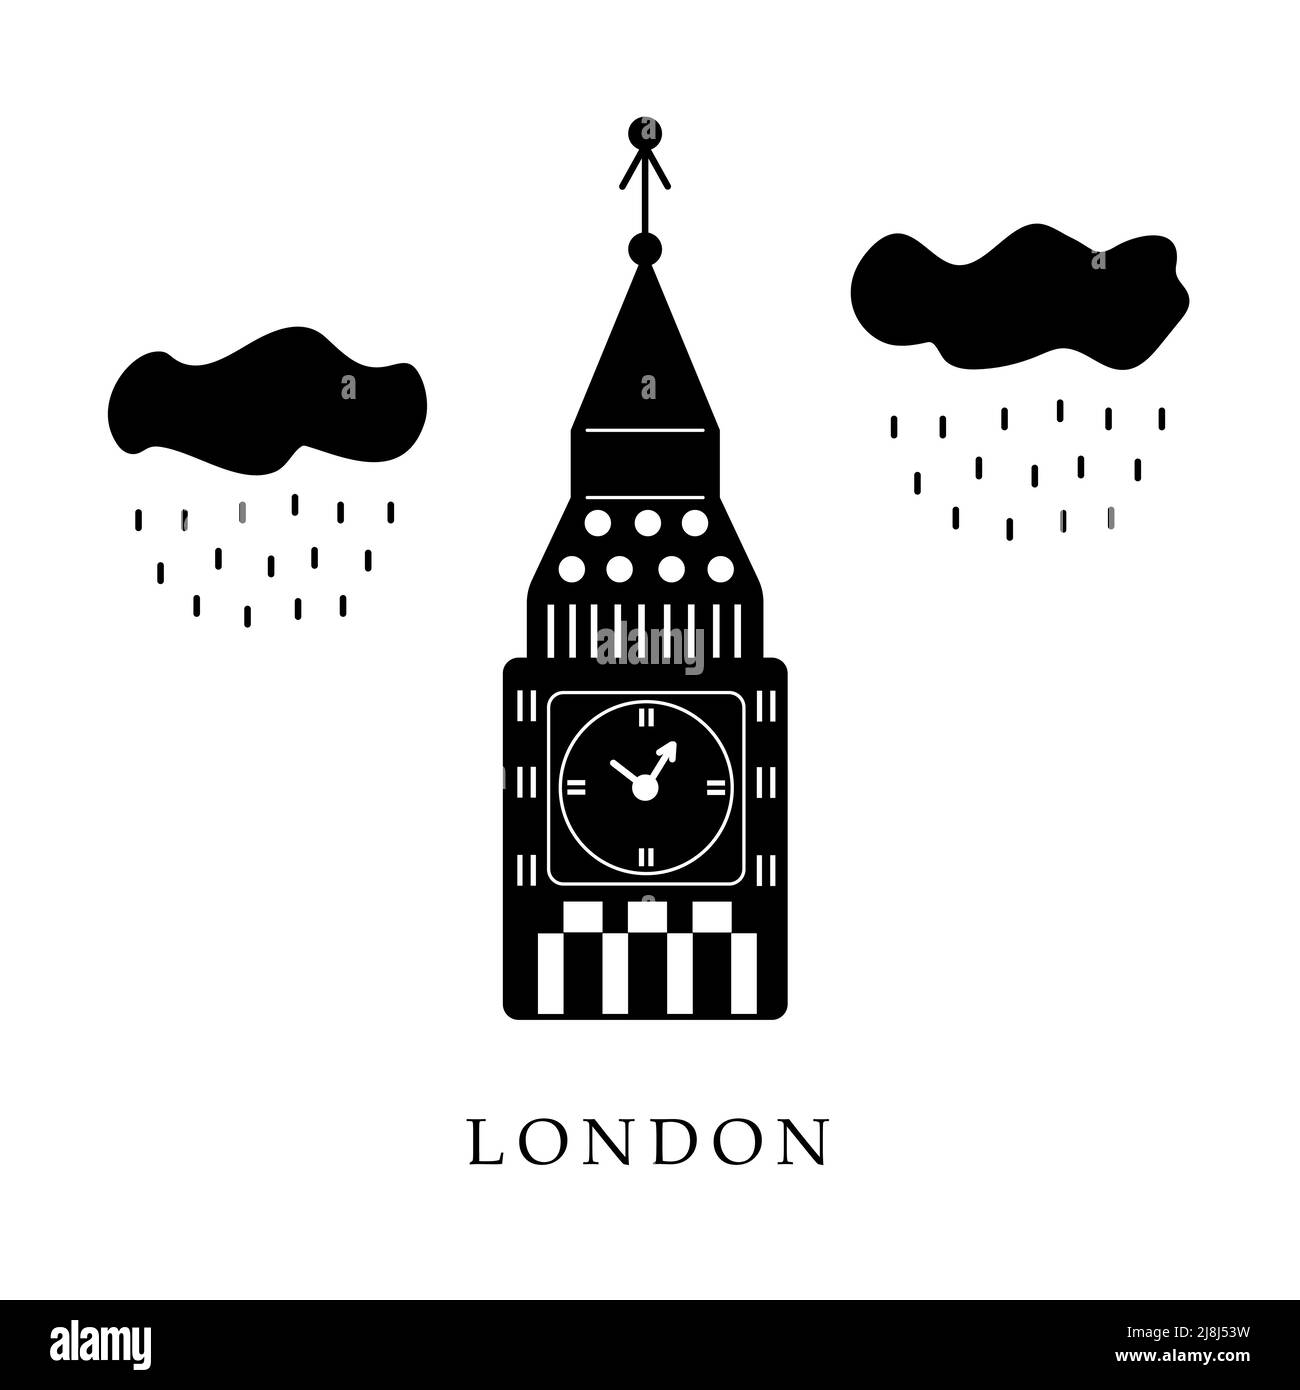 European capitals, London. Black and white illustration Stock Vector